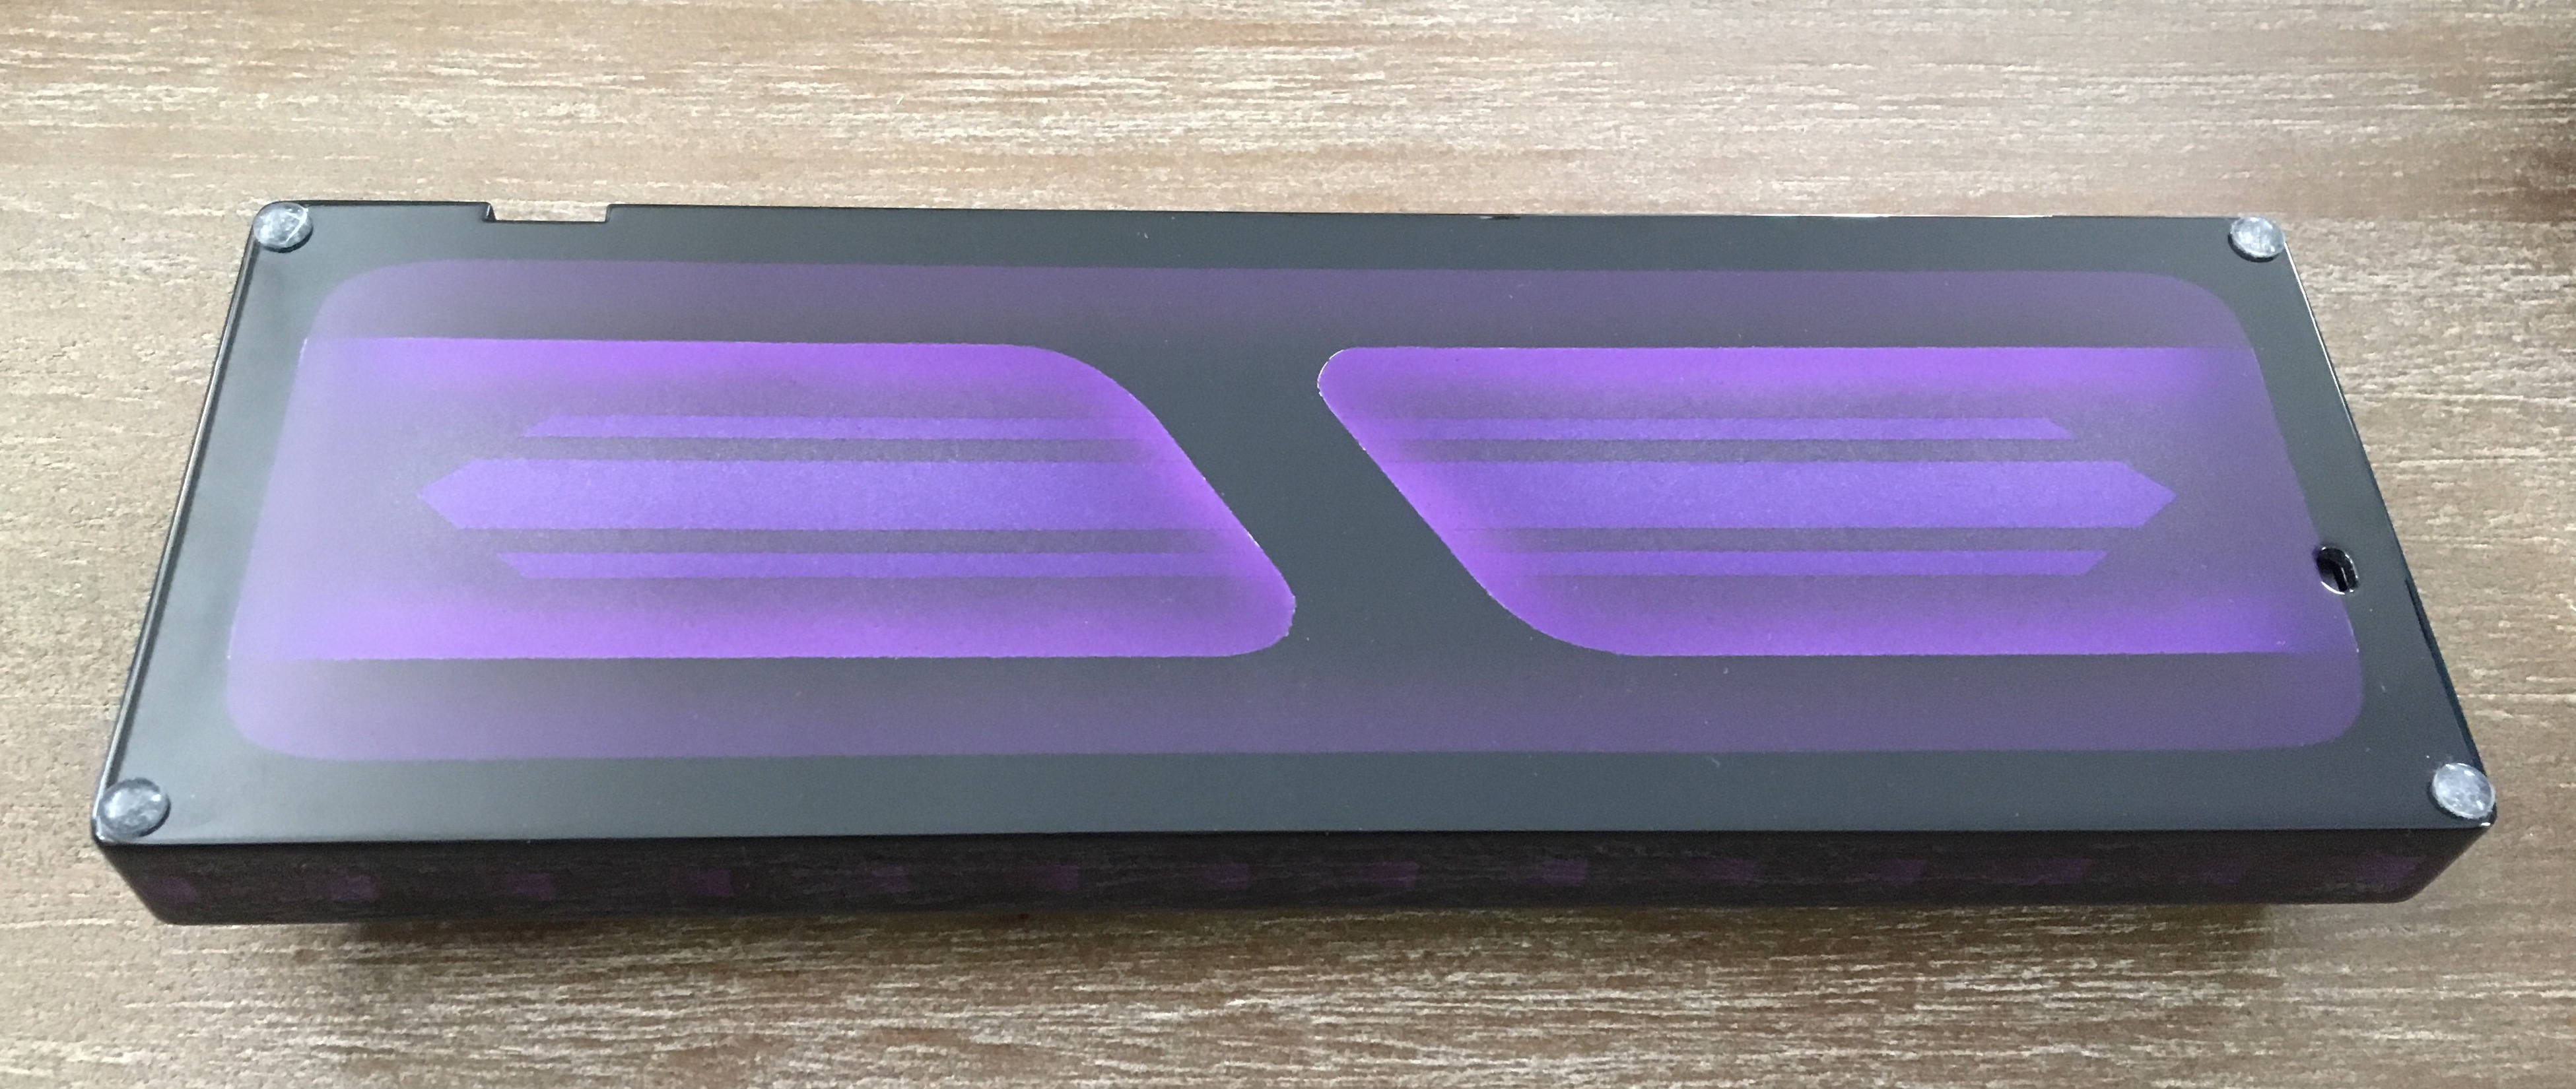 Bottom of the purple prototype ARTIZEN case